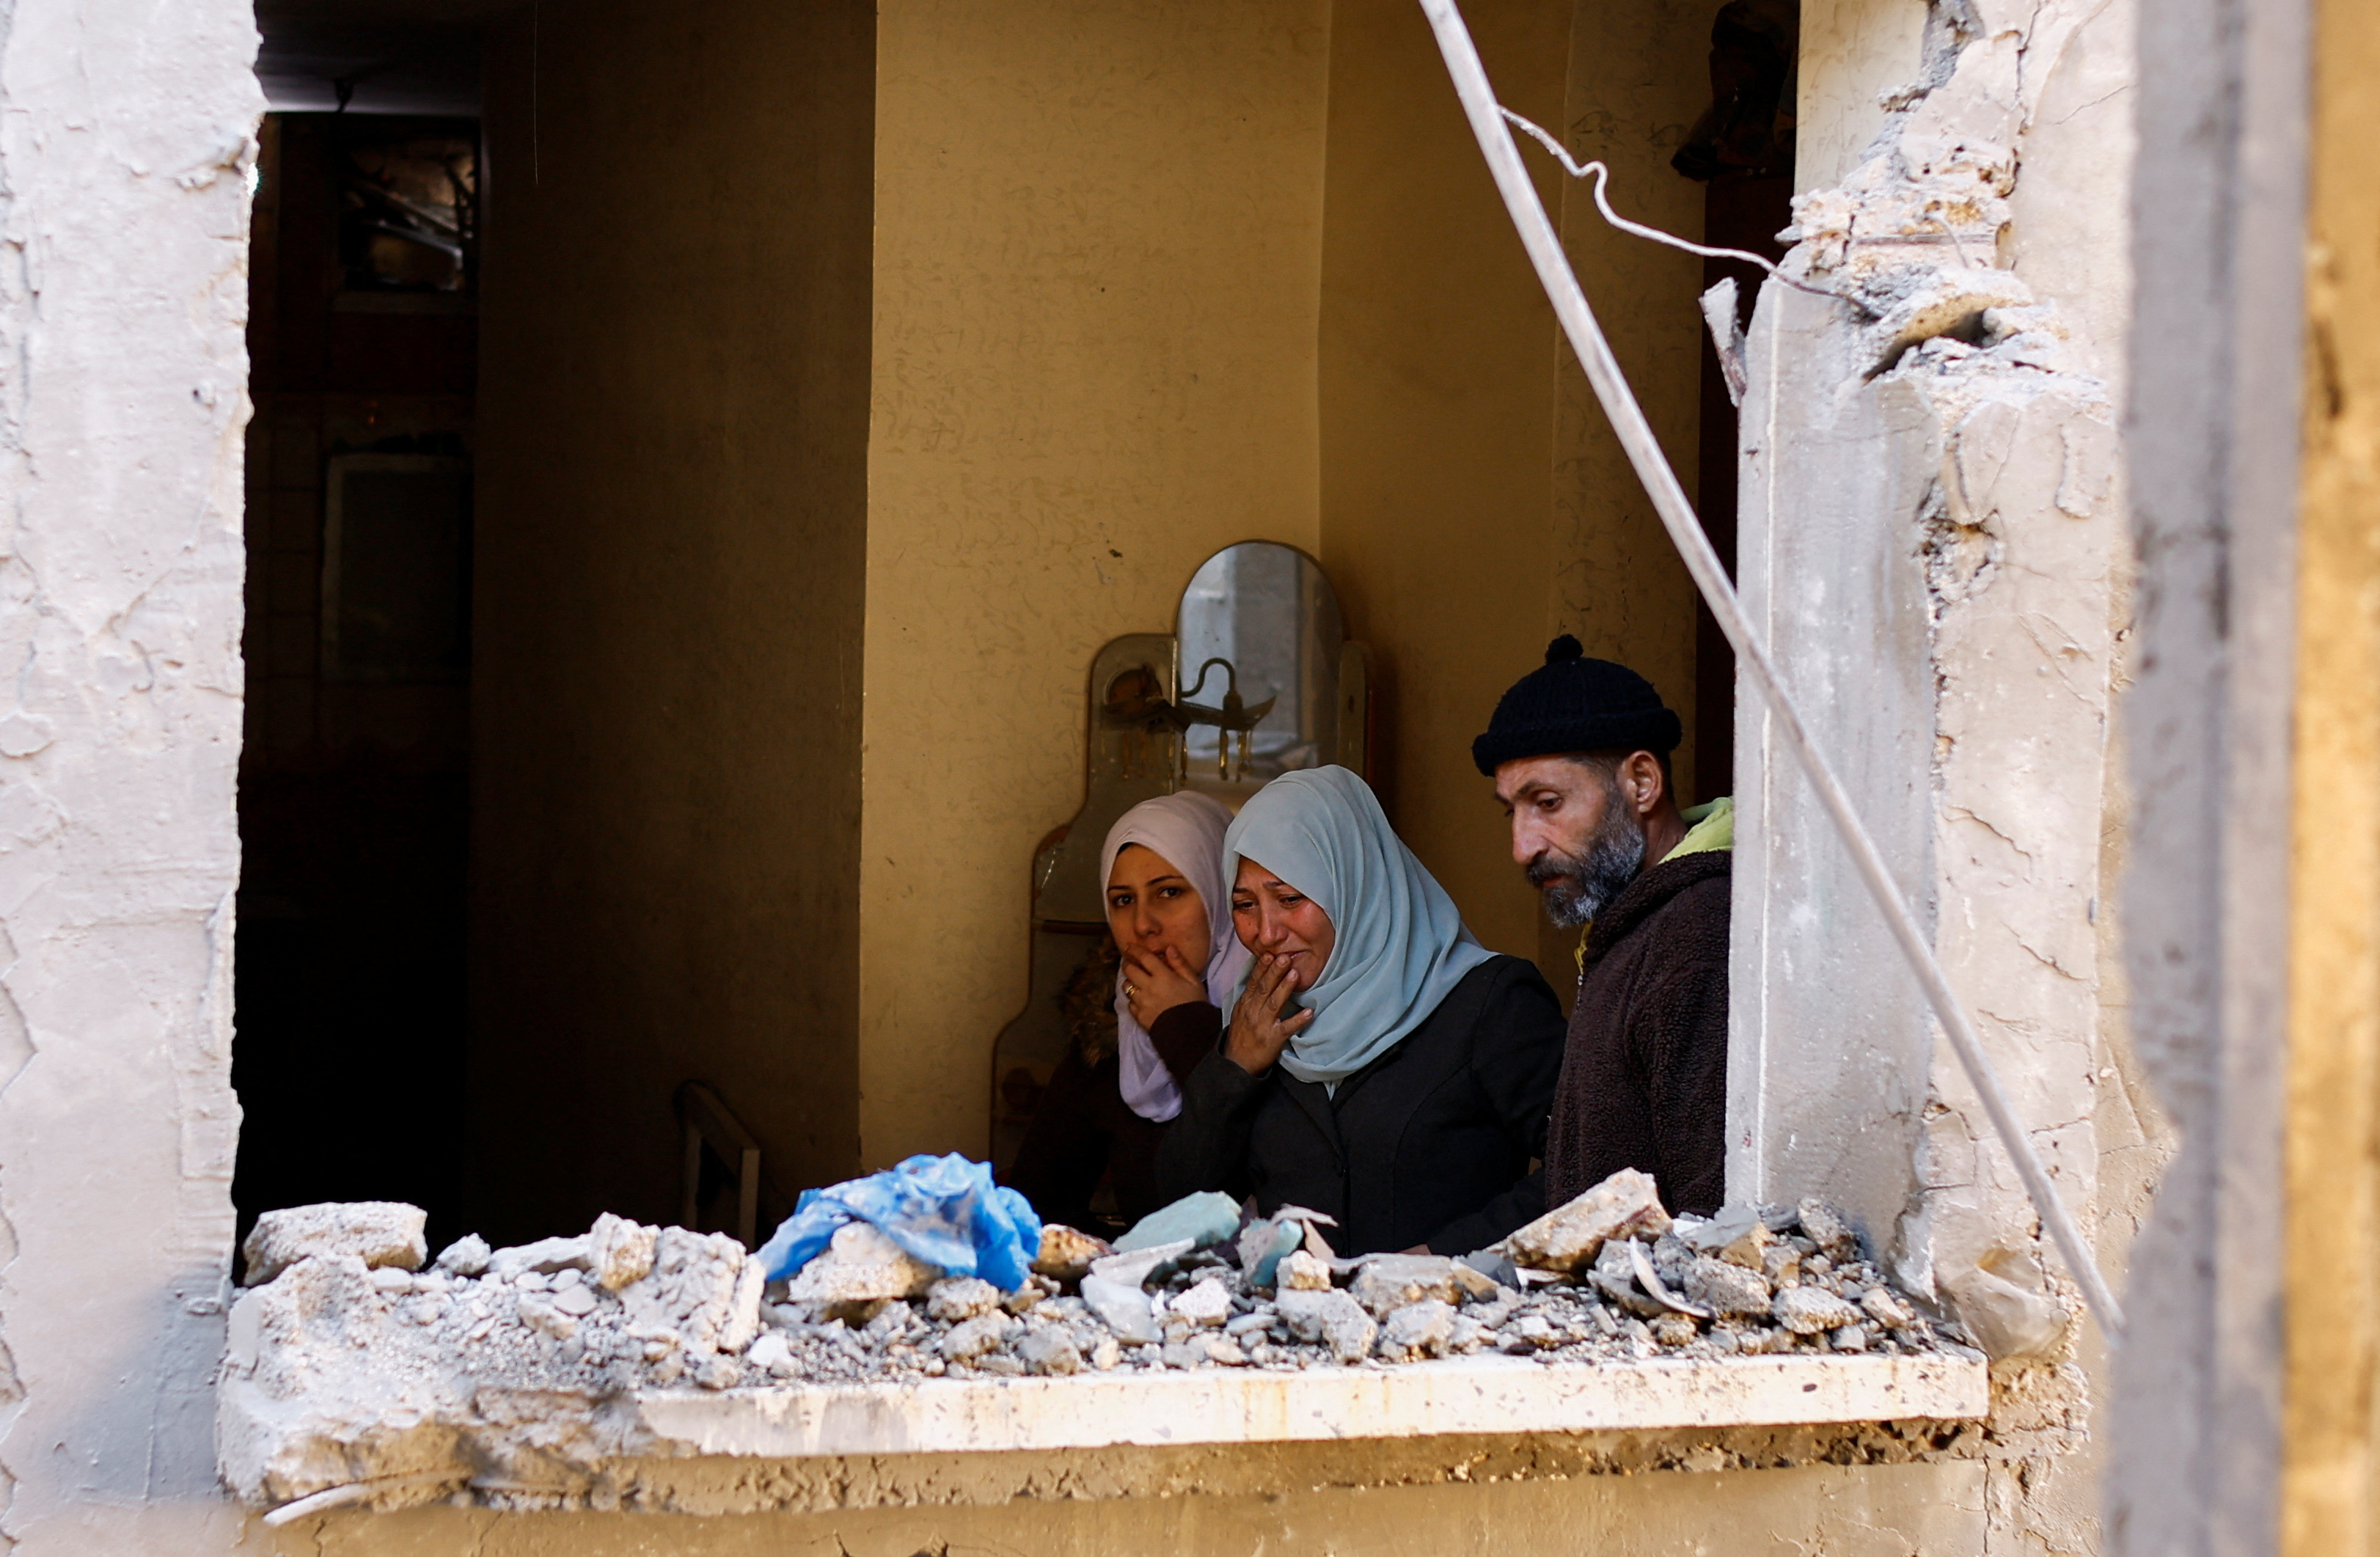 Aftermath an Israeli strike on a house, in Rafah